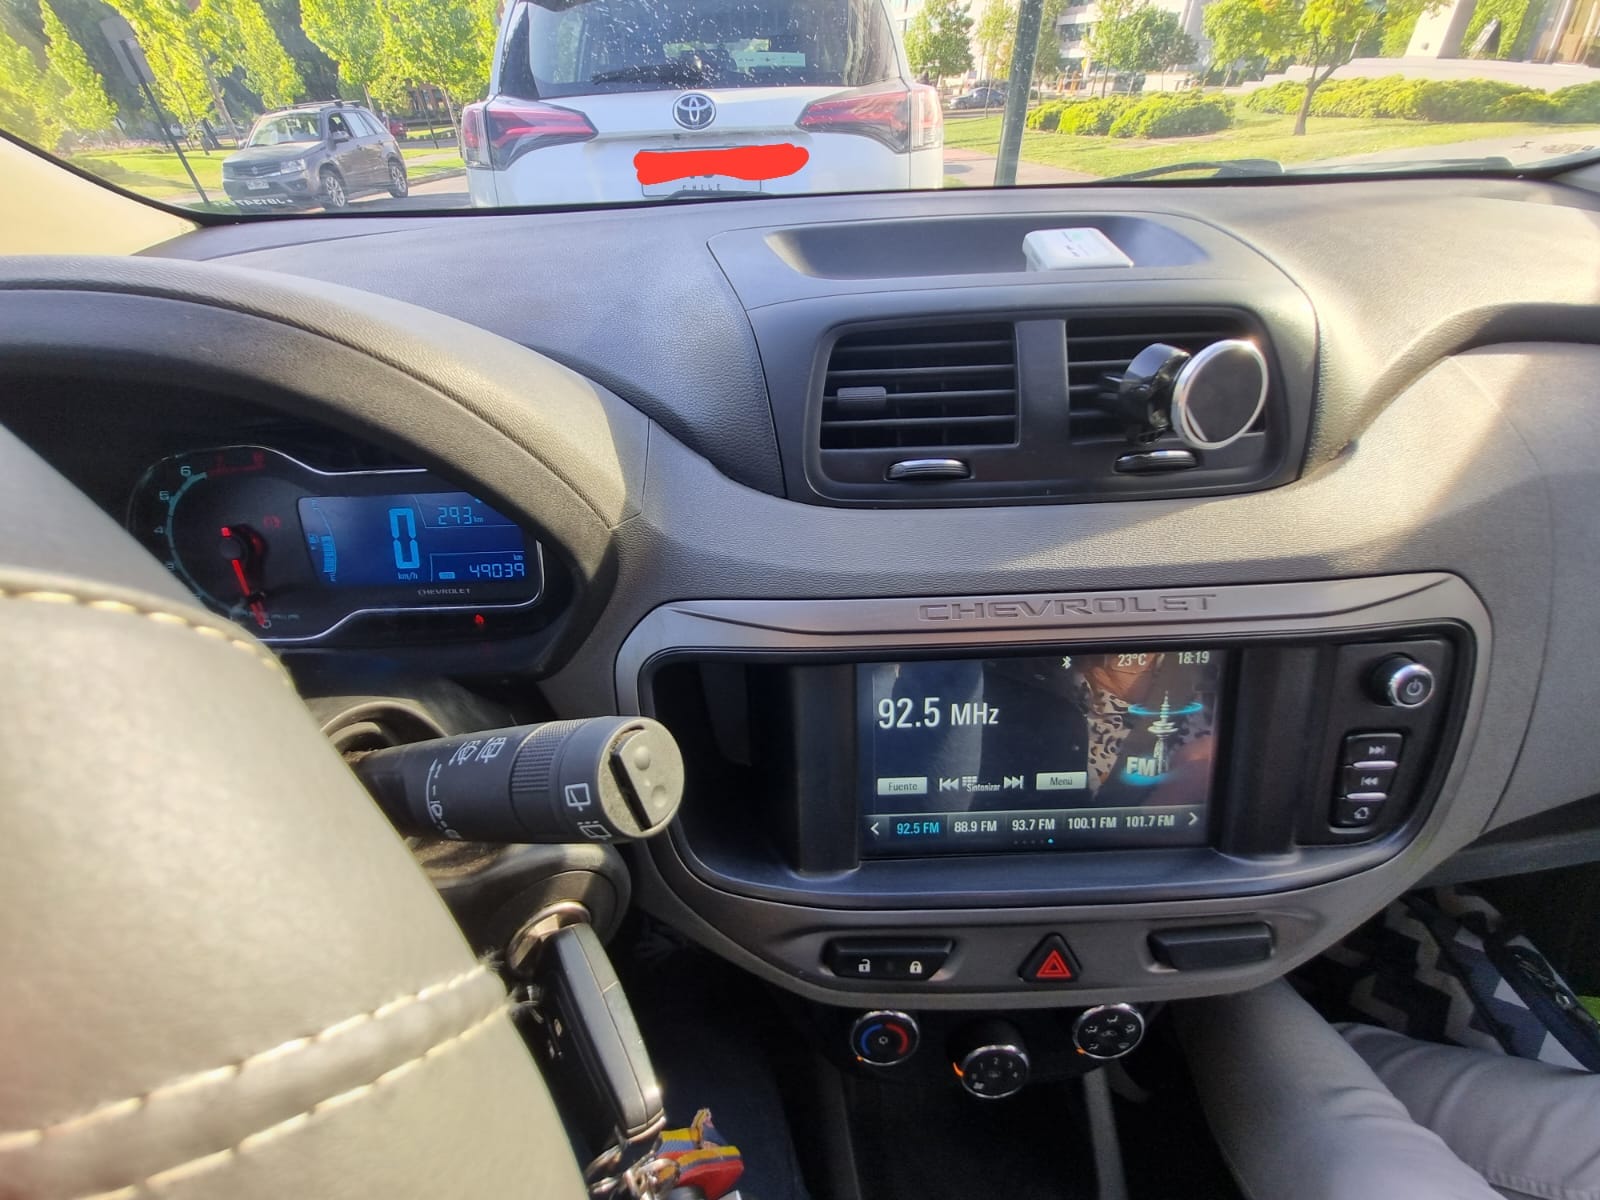 Chevrolet Spin Ltz 1.8 año 2018